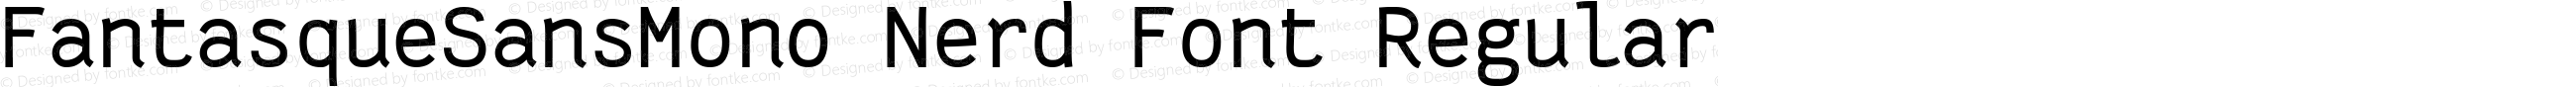 Fantasque Sans Mono Regular Nerd Font Complete